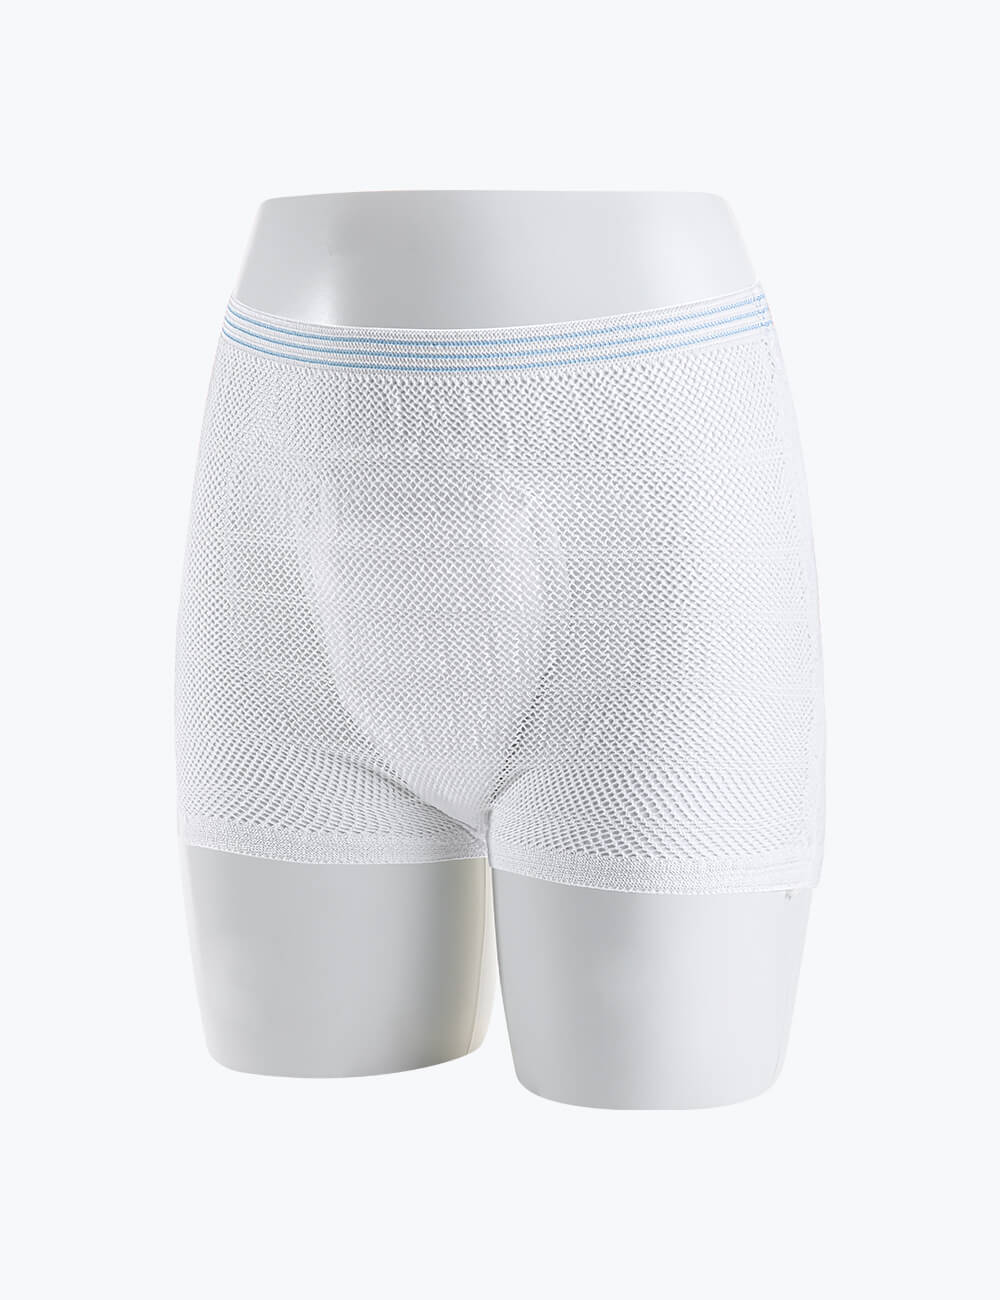 Moms Panties  Women Postpartum Disposable Hospital Mesh Underwear –  CARERSPK